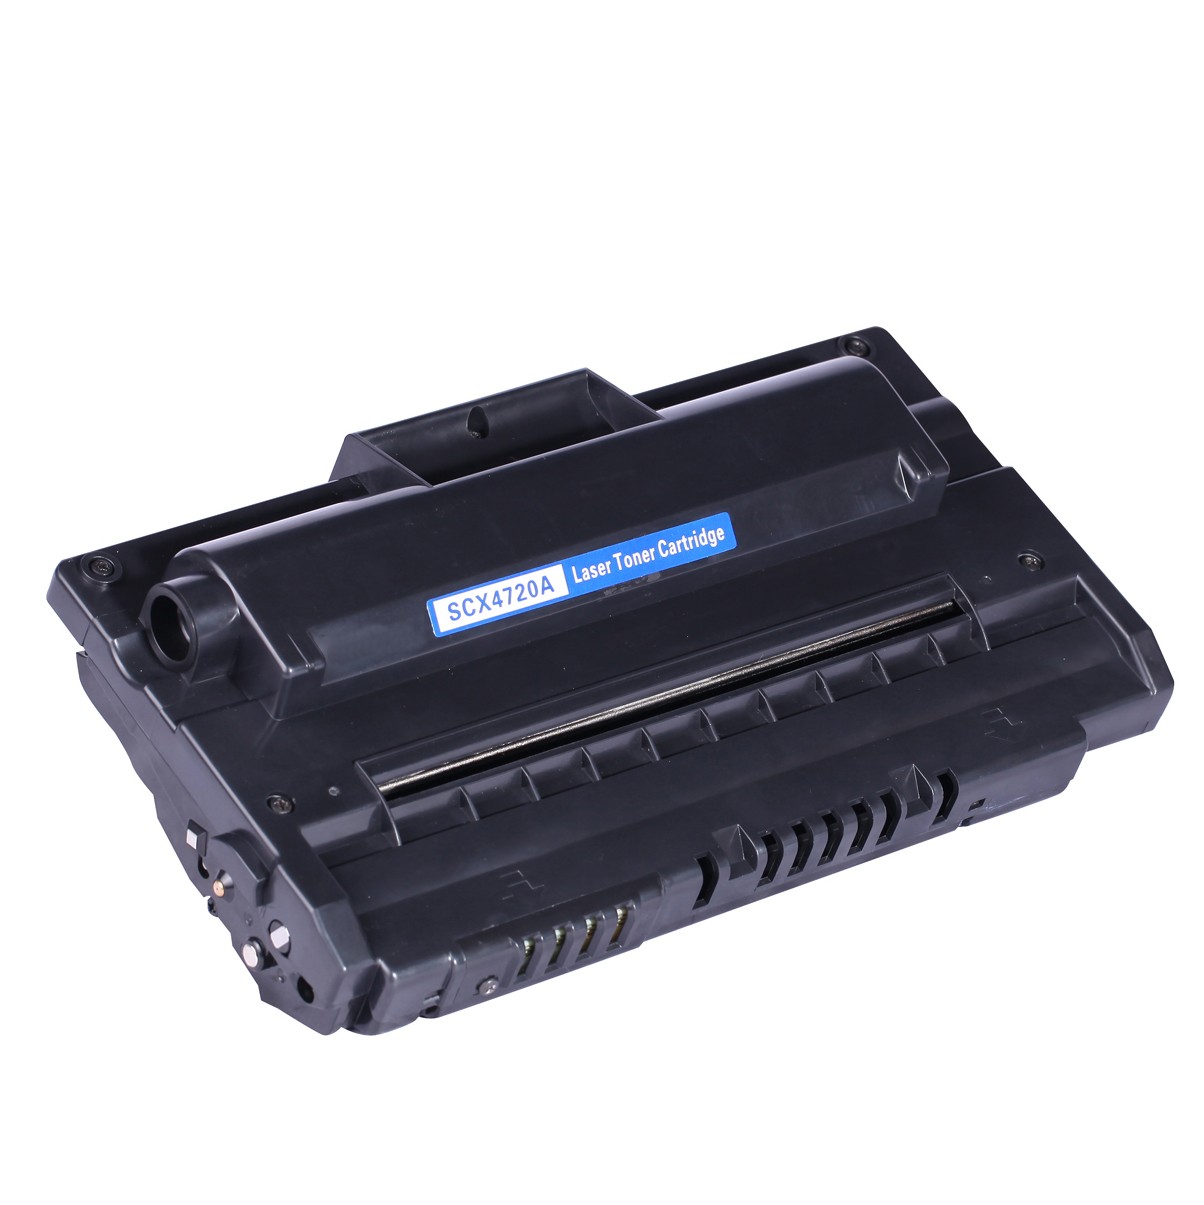 Compatible toner cartridge for Samsung SCX4720A